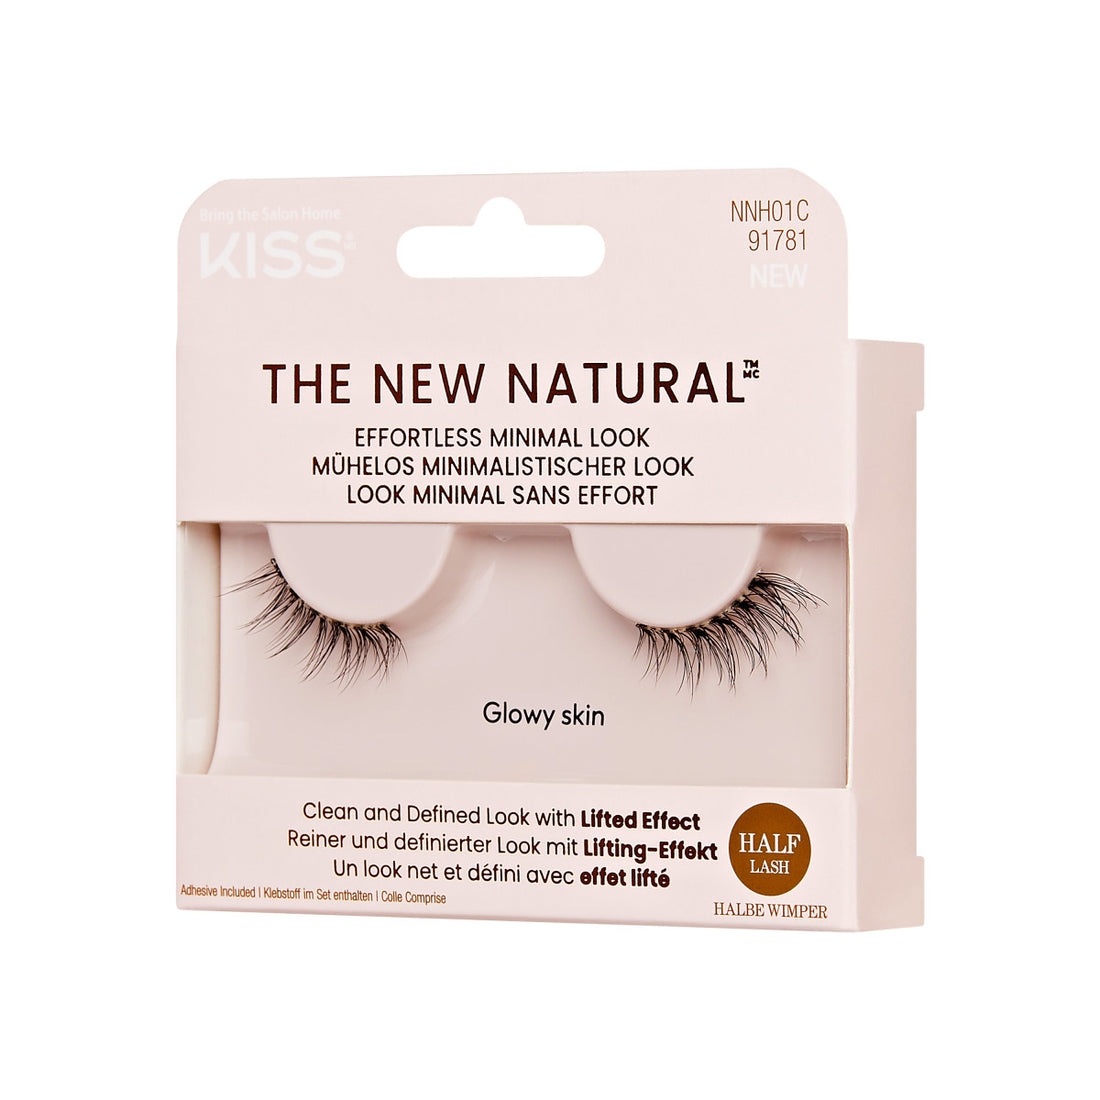 KISS The New Natural, False Eyelashes, Glowy Skin, 12mm, 1 Pair